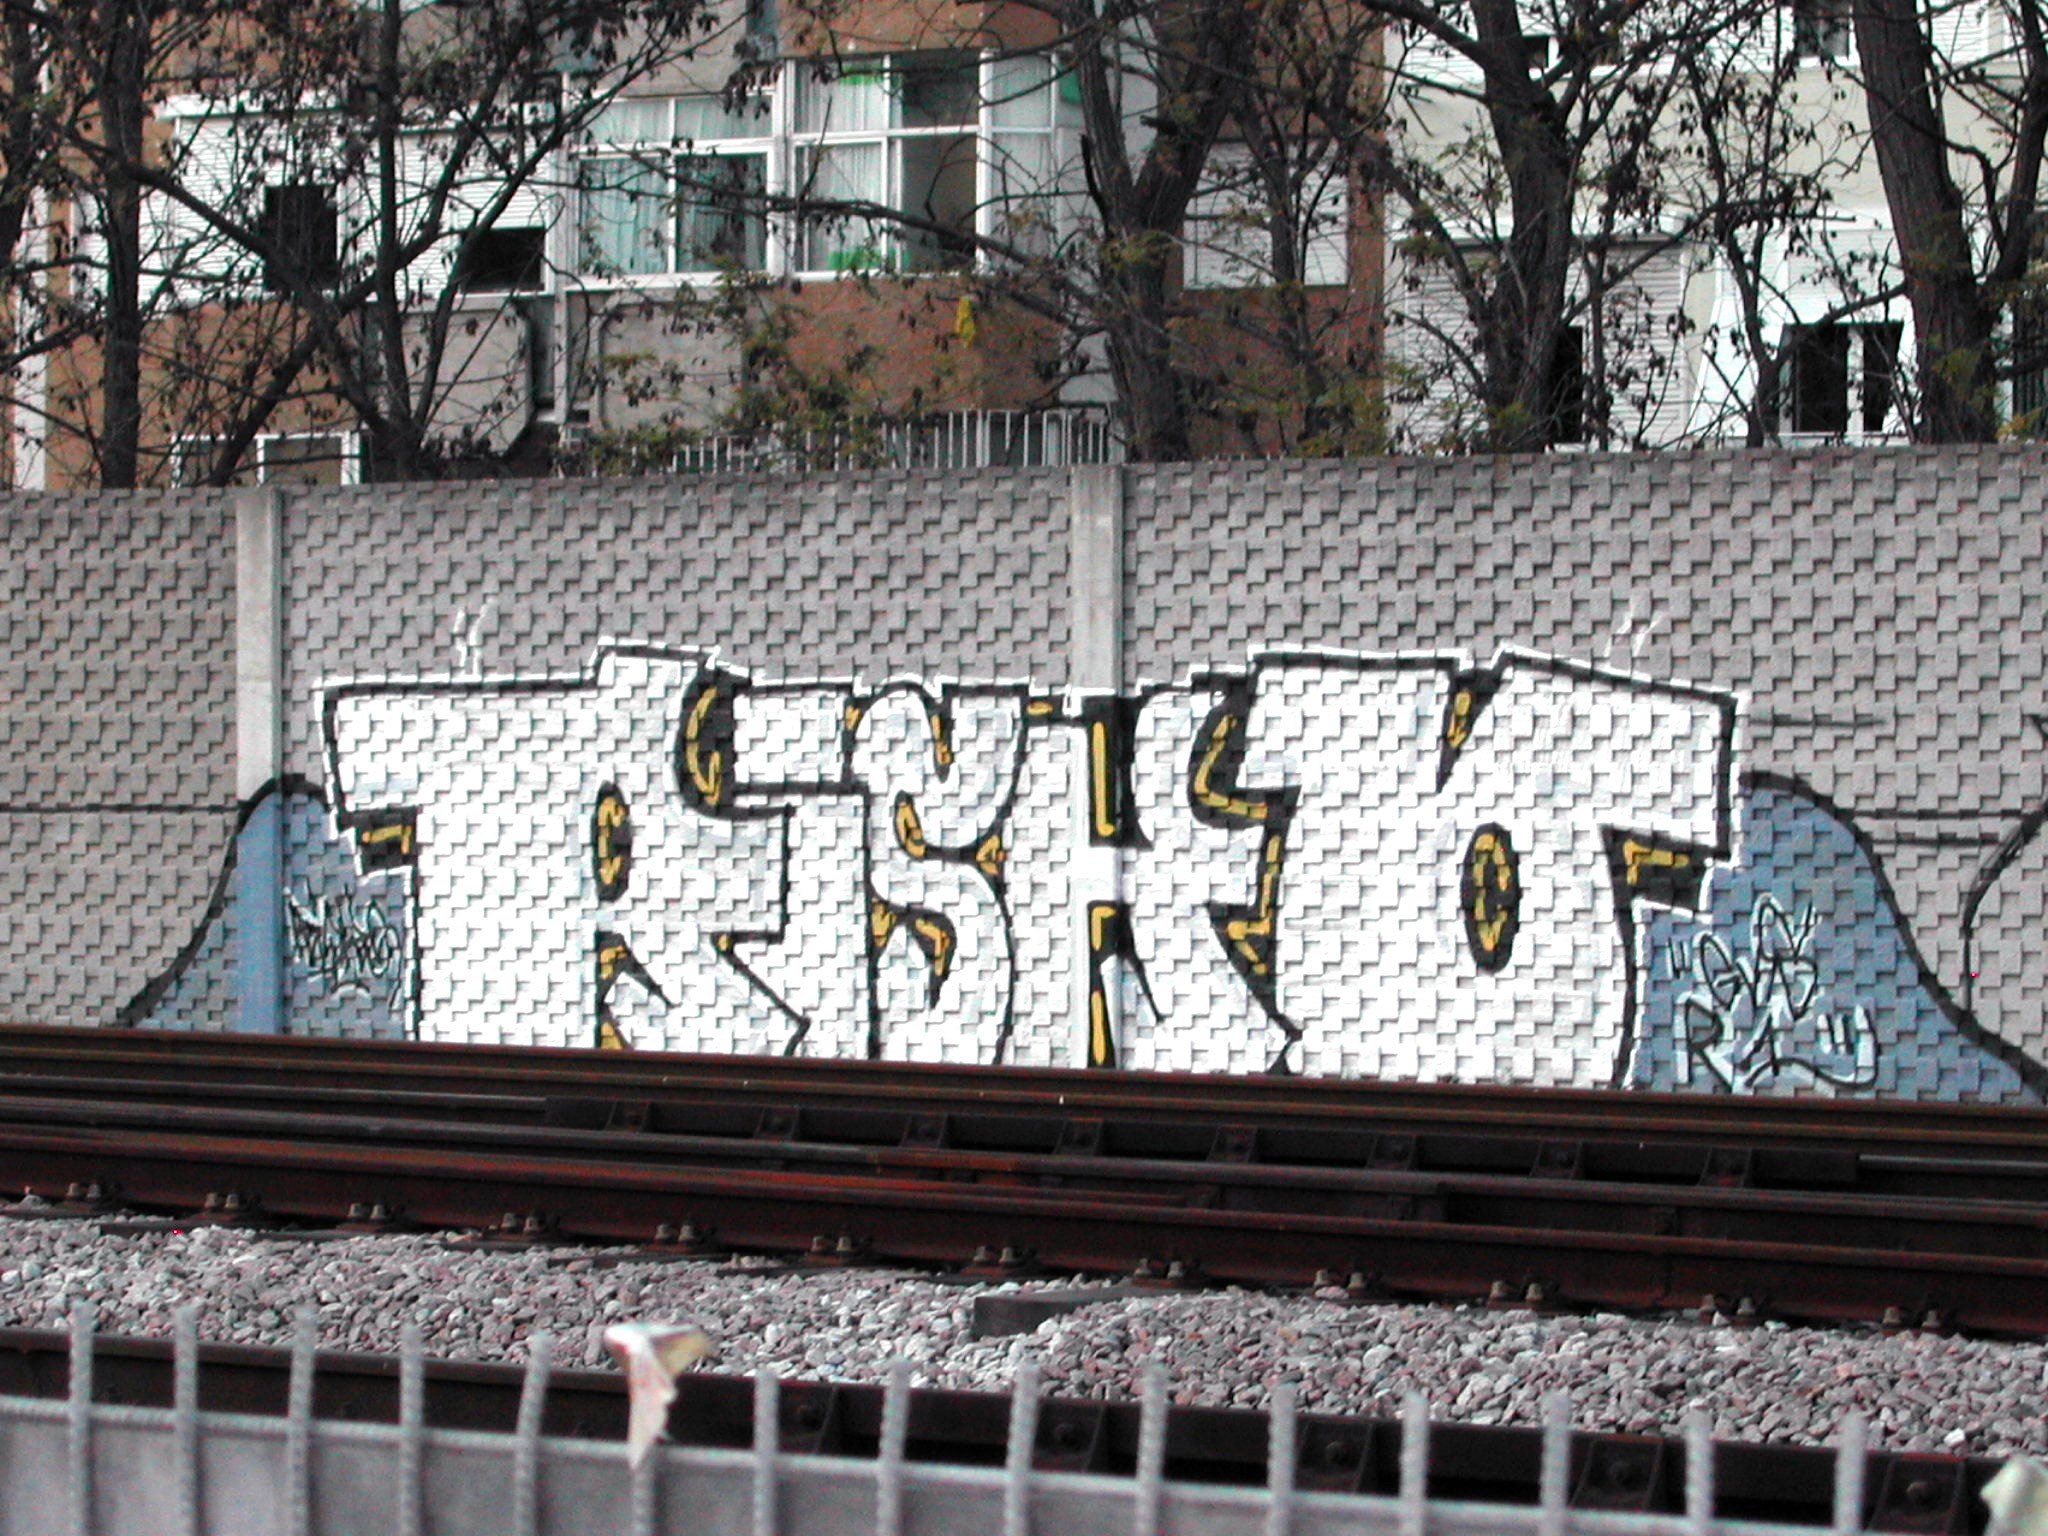 risko street crack kids